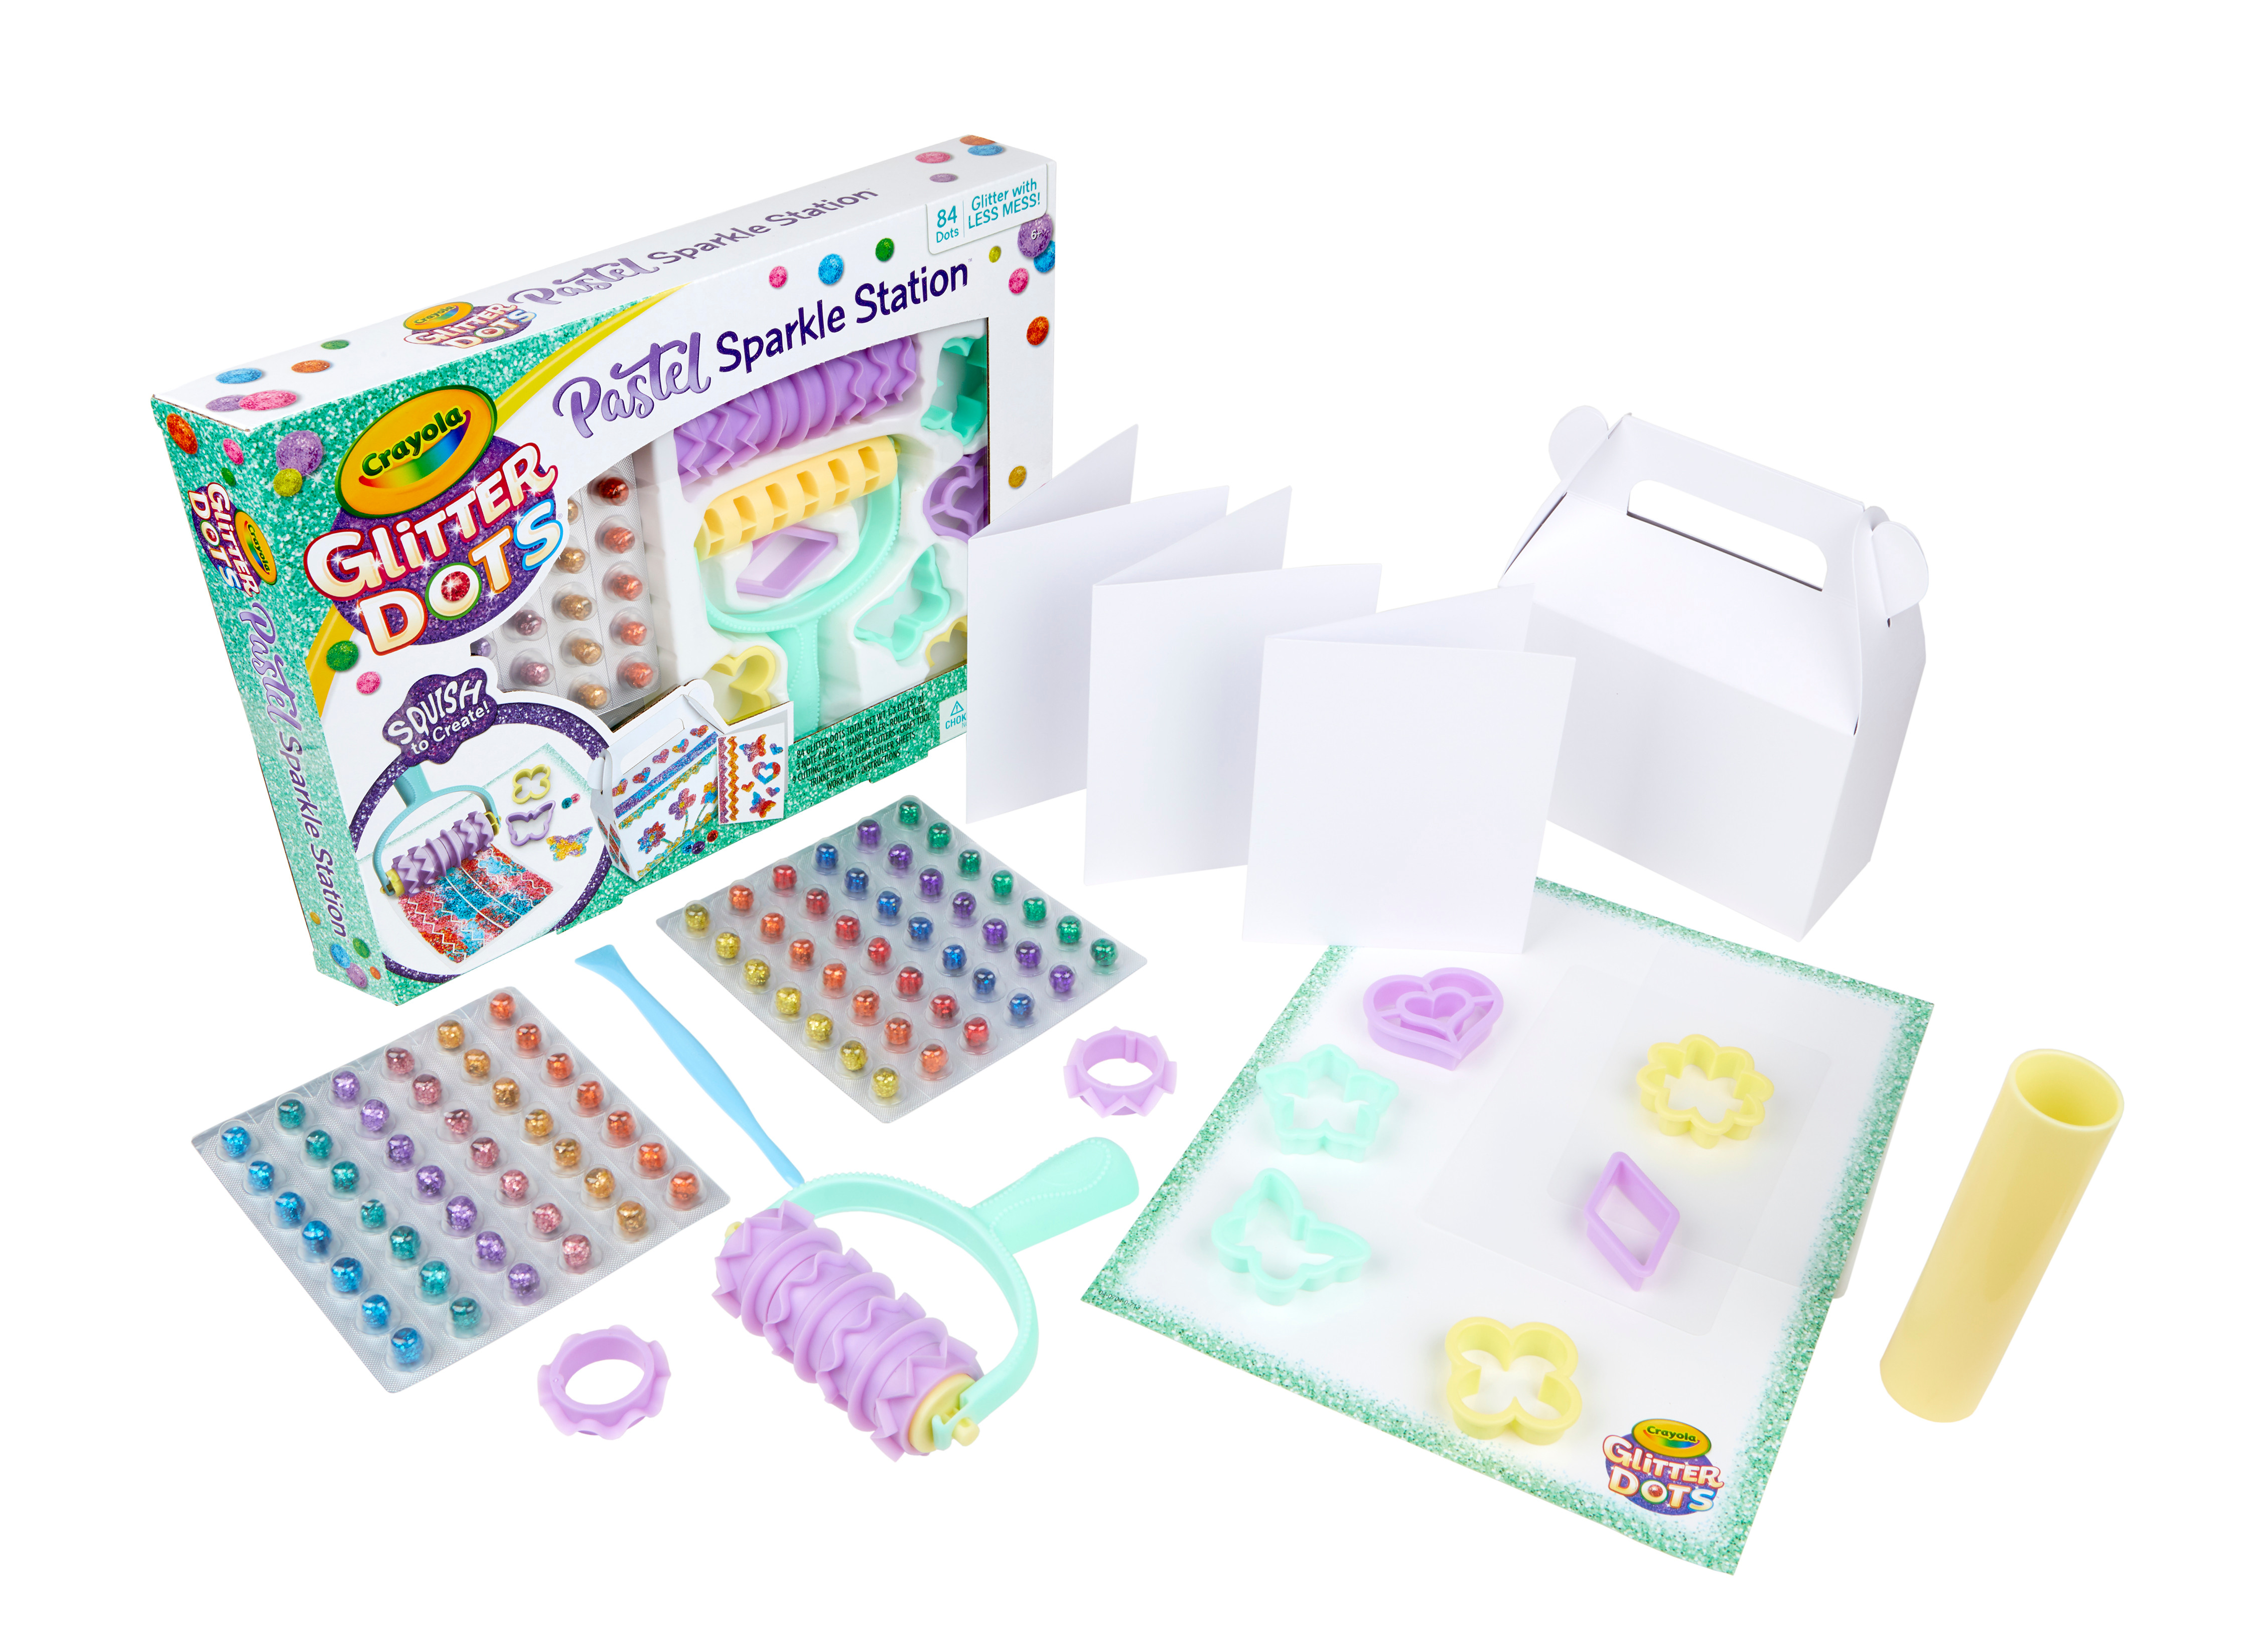 Crayola Glitter Dots Sparkle Station 100 Pieces Craft Set, Child, Ages 3+ Unisex - image 5 of 8